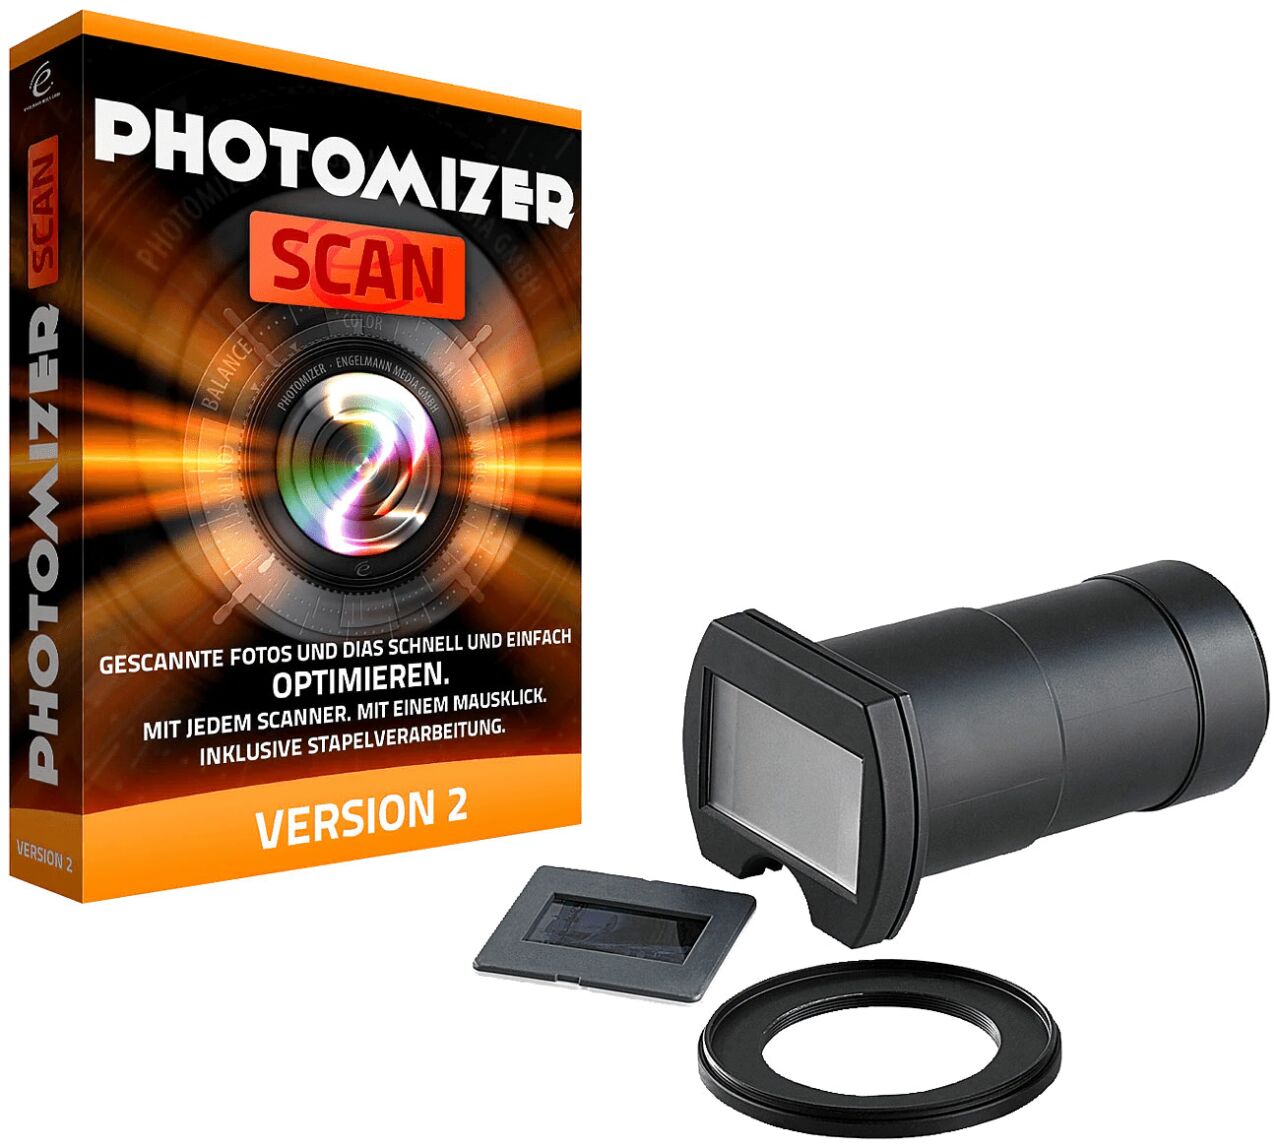 Somikon DSLR lens attachment for digitising slides/negatives